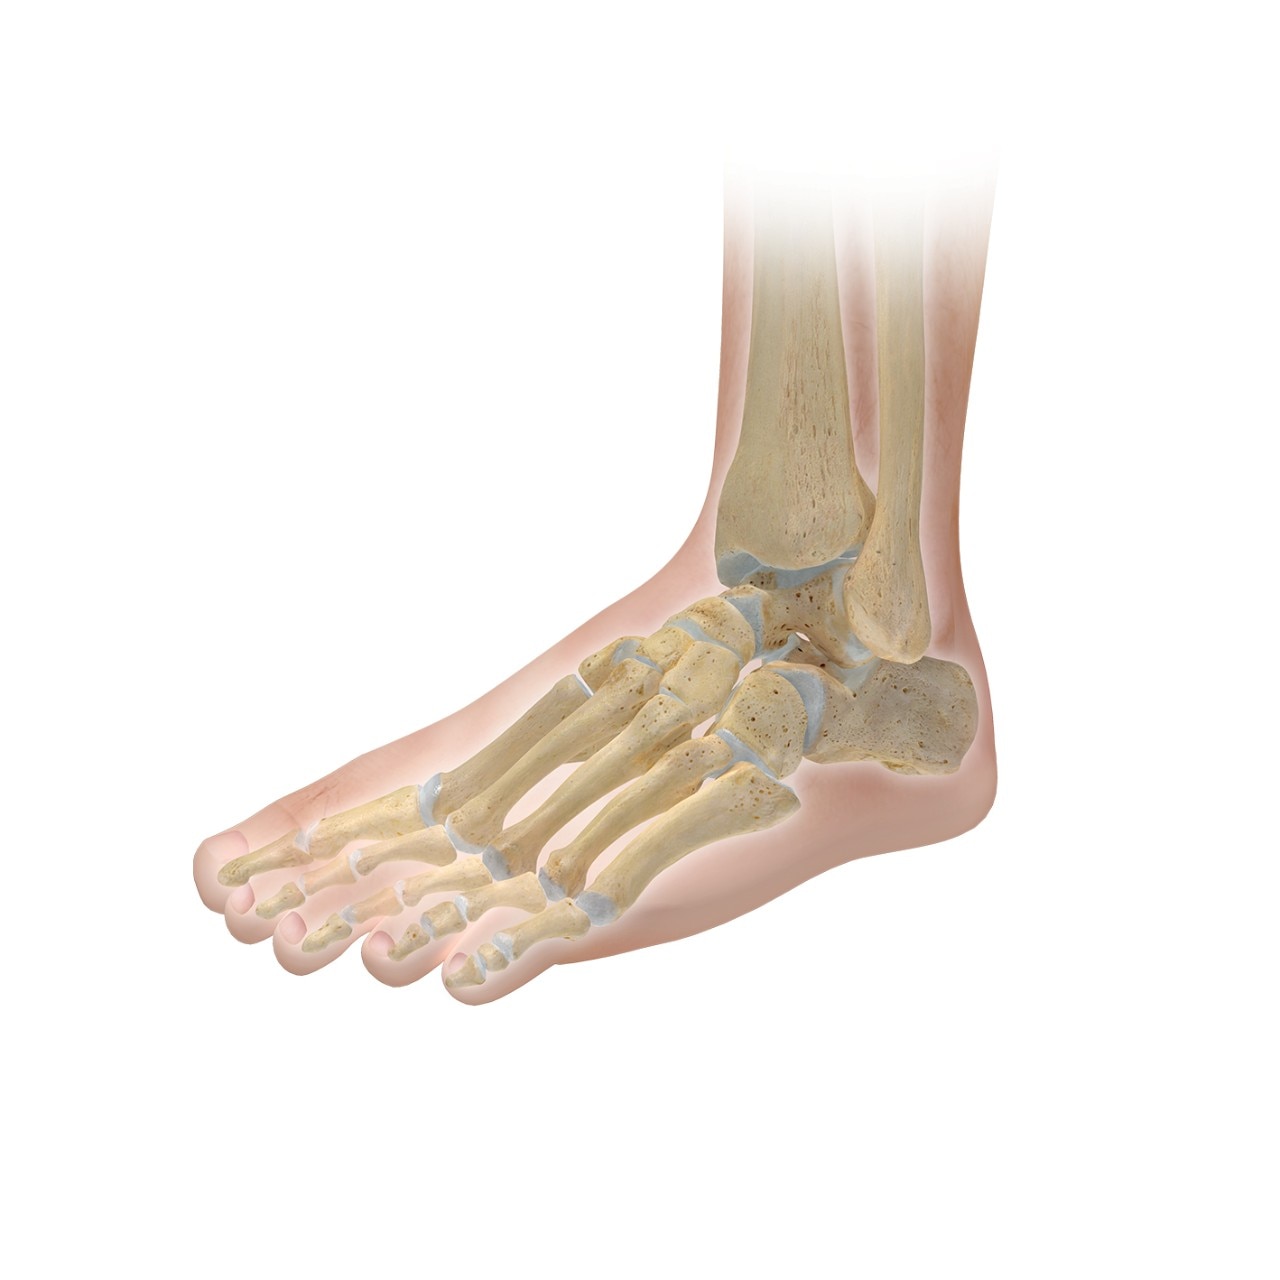 foot-illustration-healthy